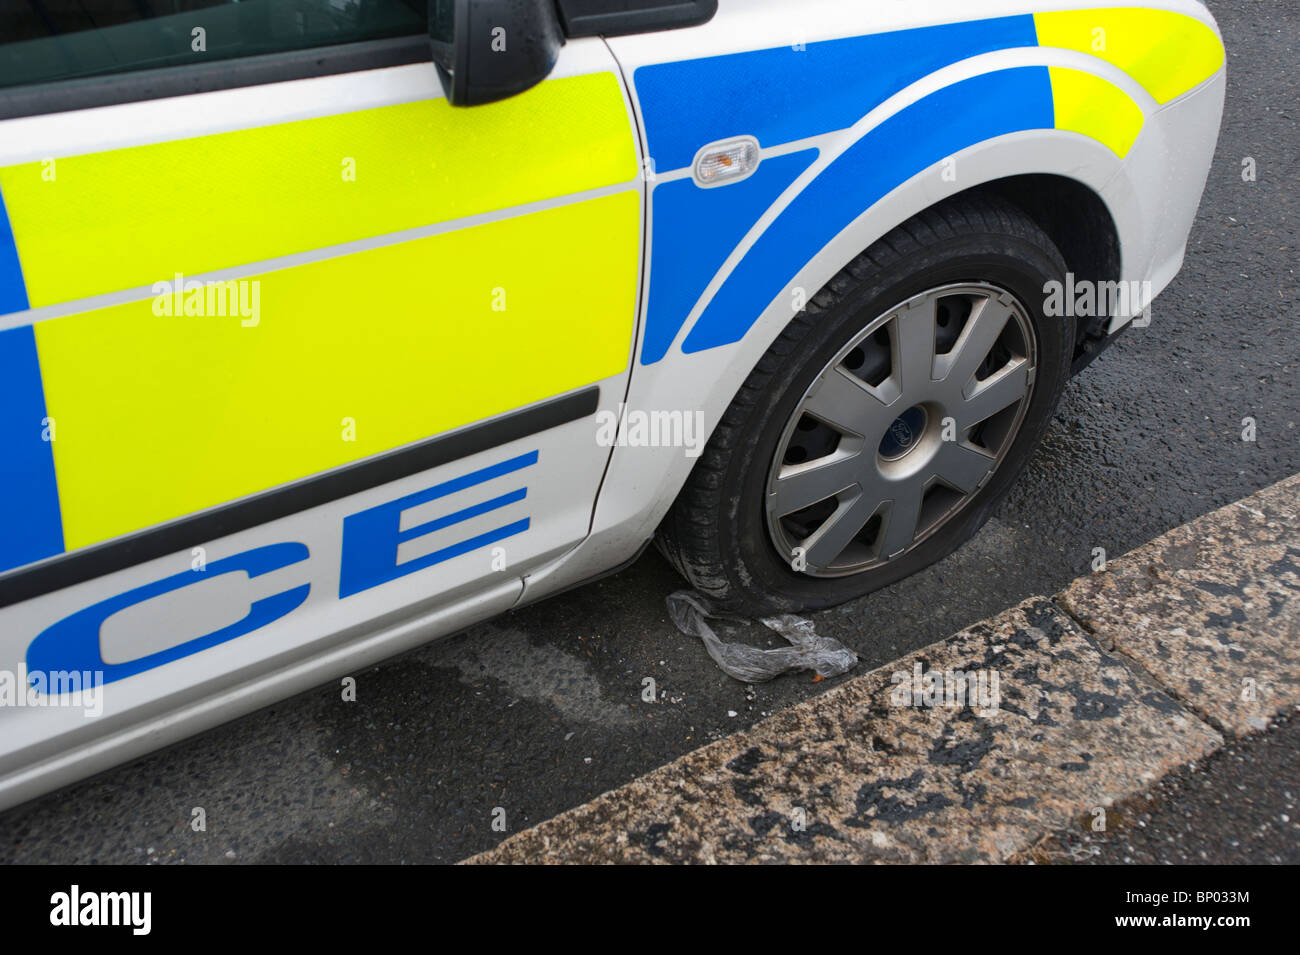 Polic Car with flat tyre, UK Stock Photo